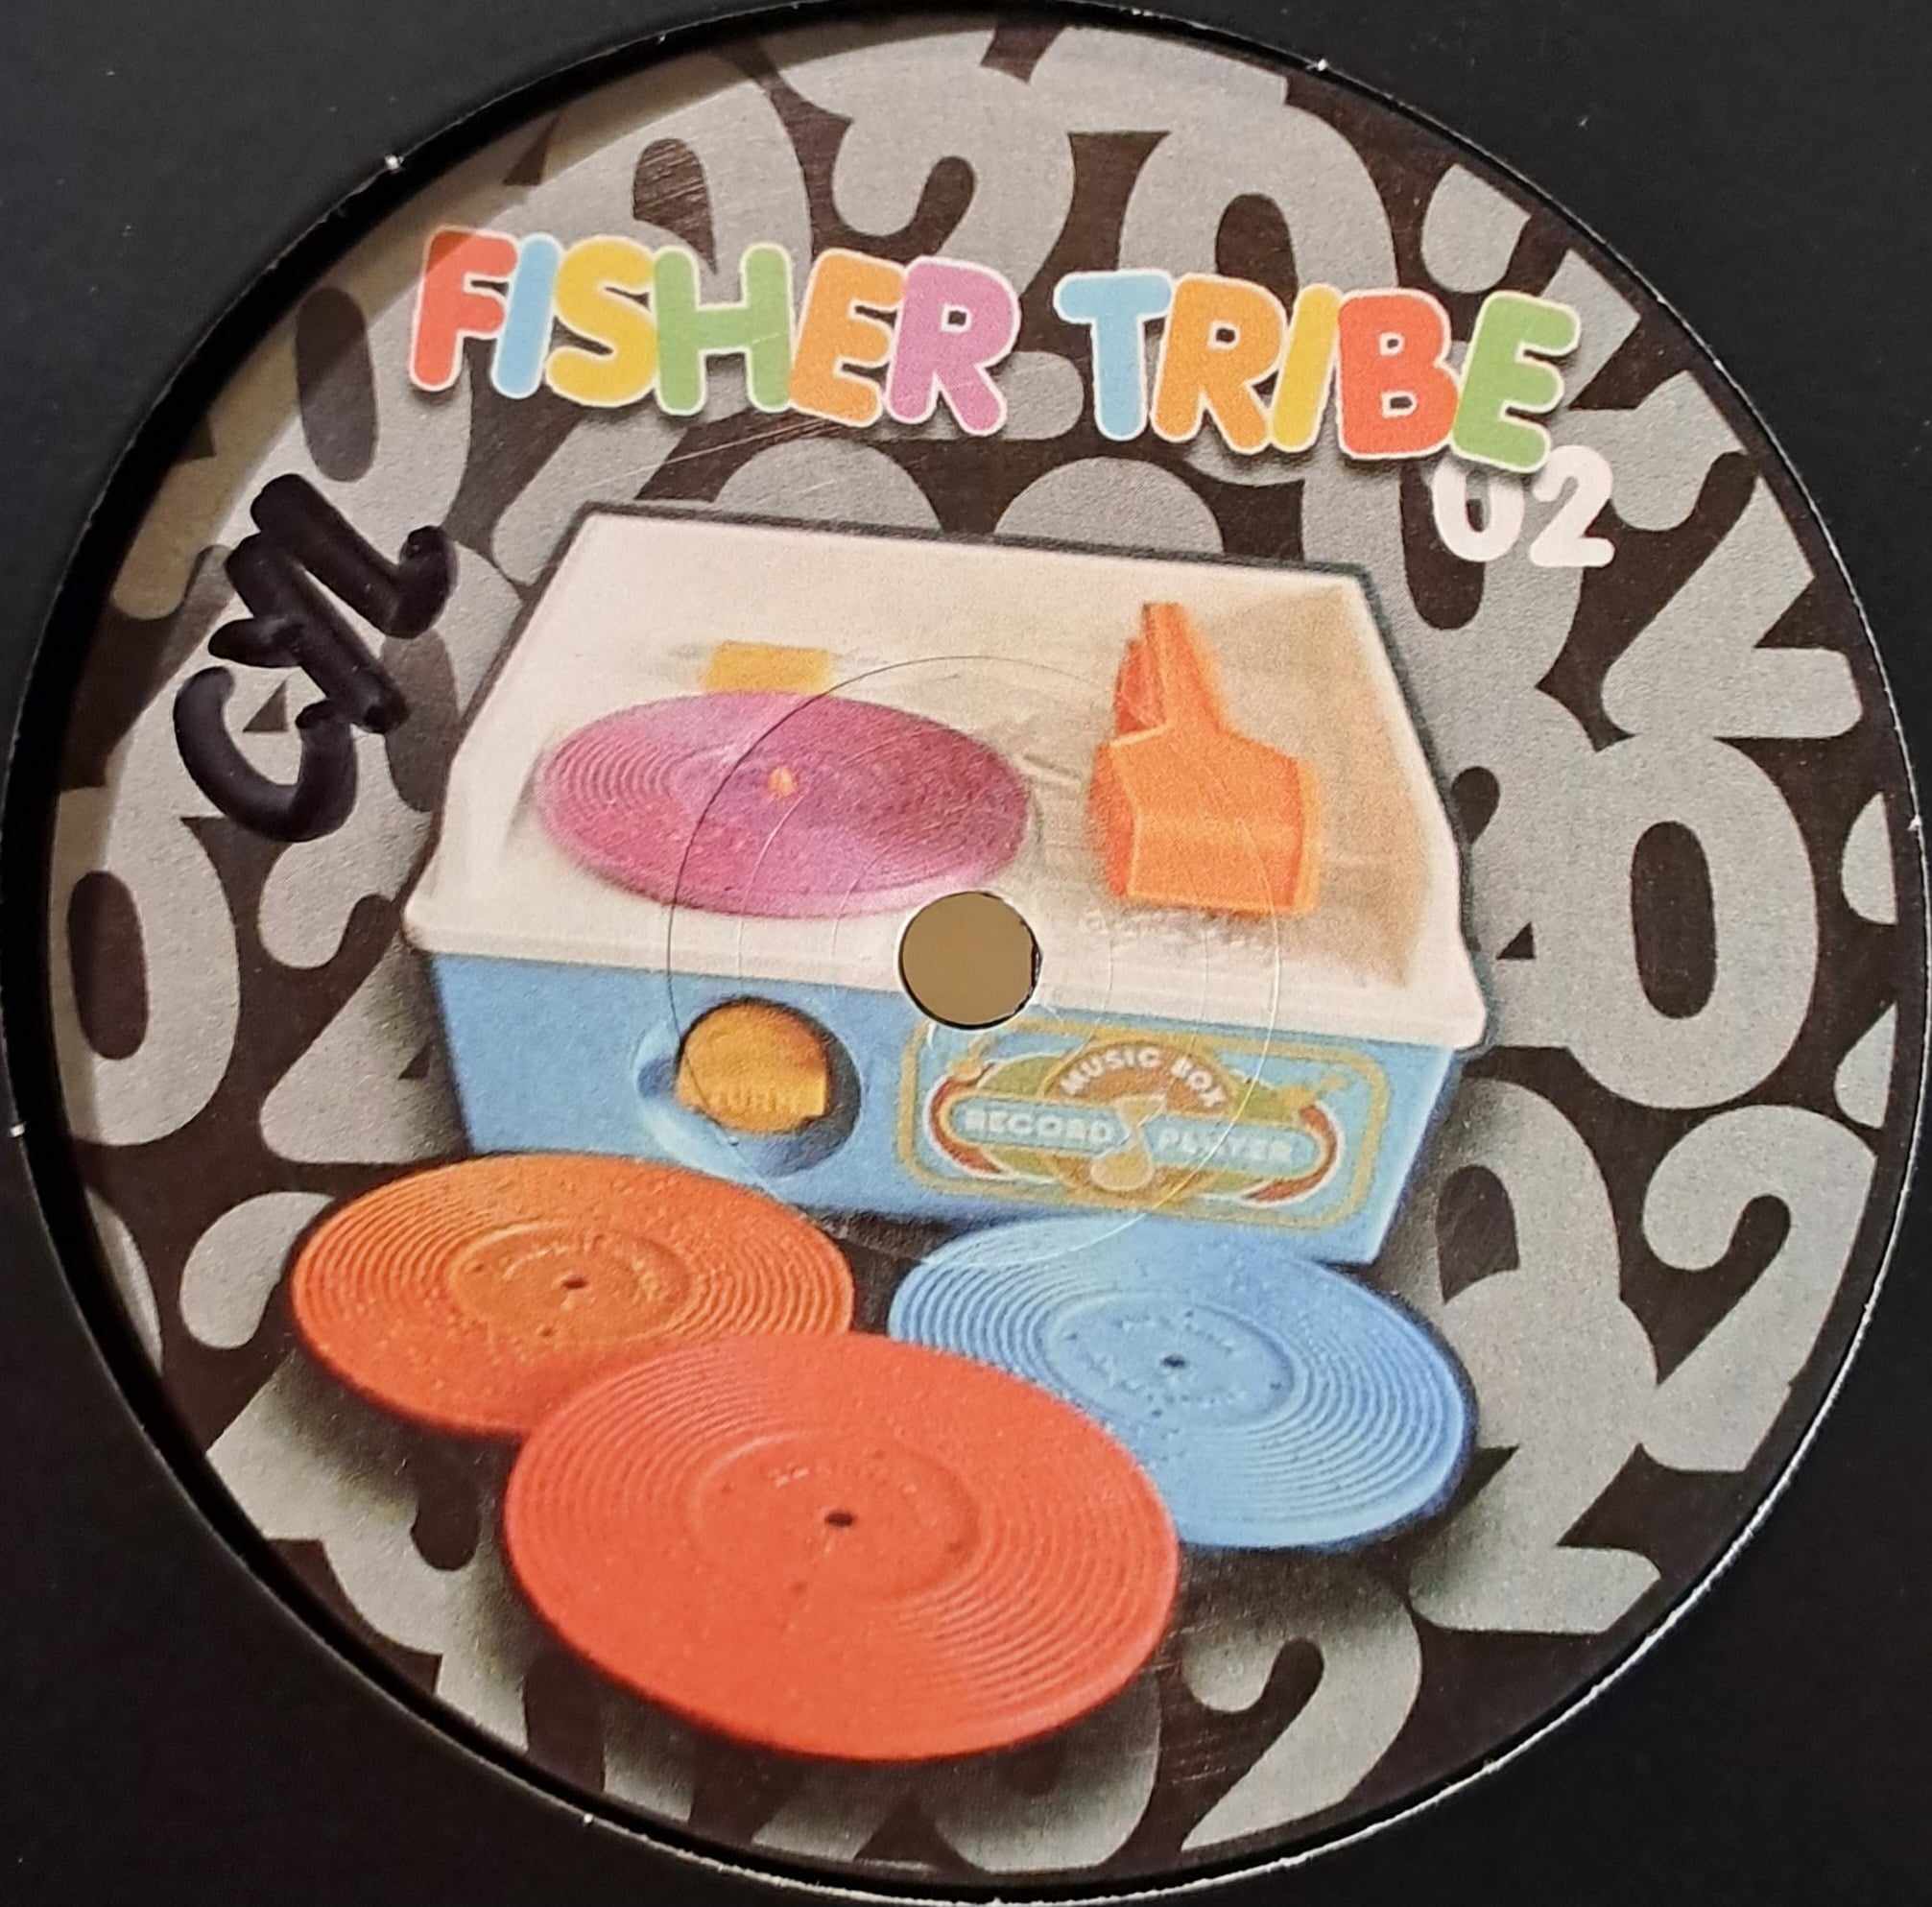 Fisher Tribe 02 - vinyle freetekno